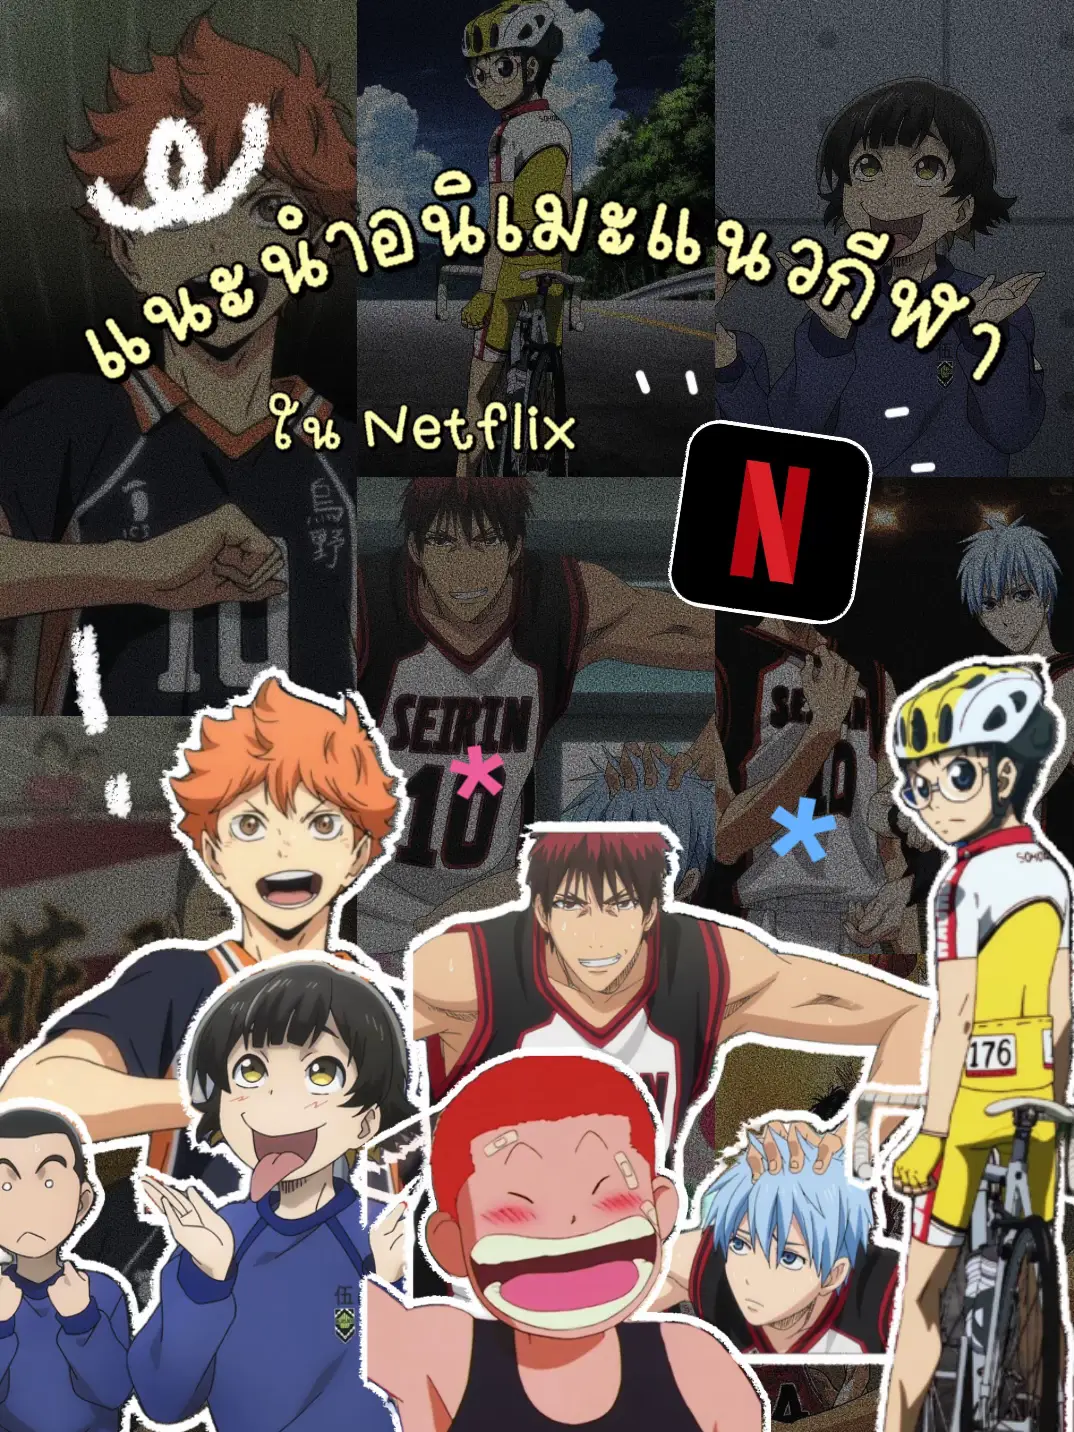 Beloved Classic Anime 'Slam Dunk' Now On Netflix